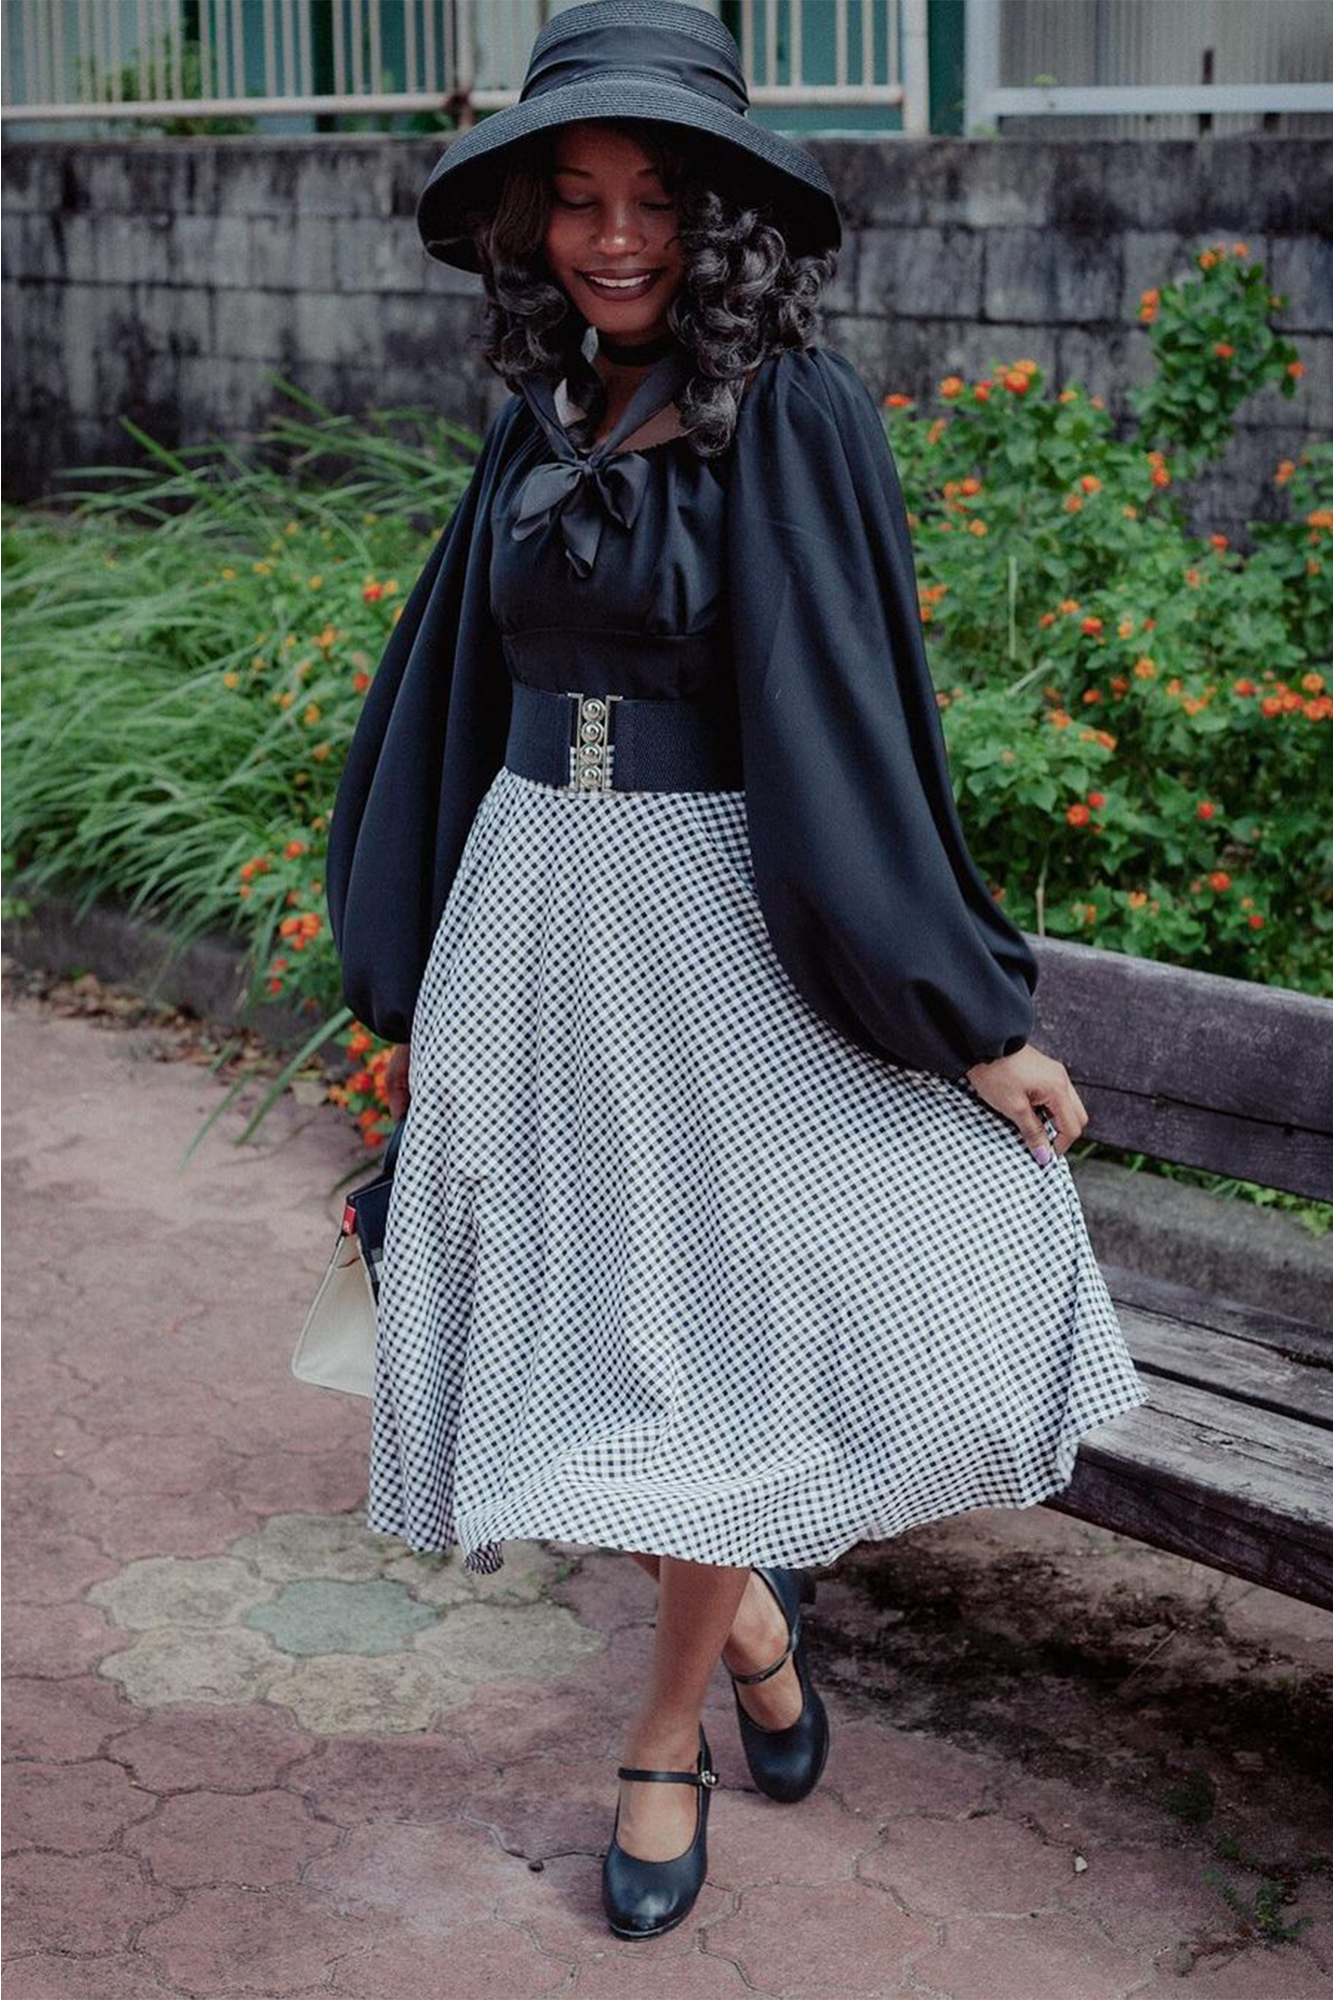 Bianca Circle Skirt in Black and White Gingham